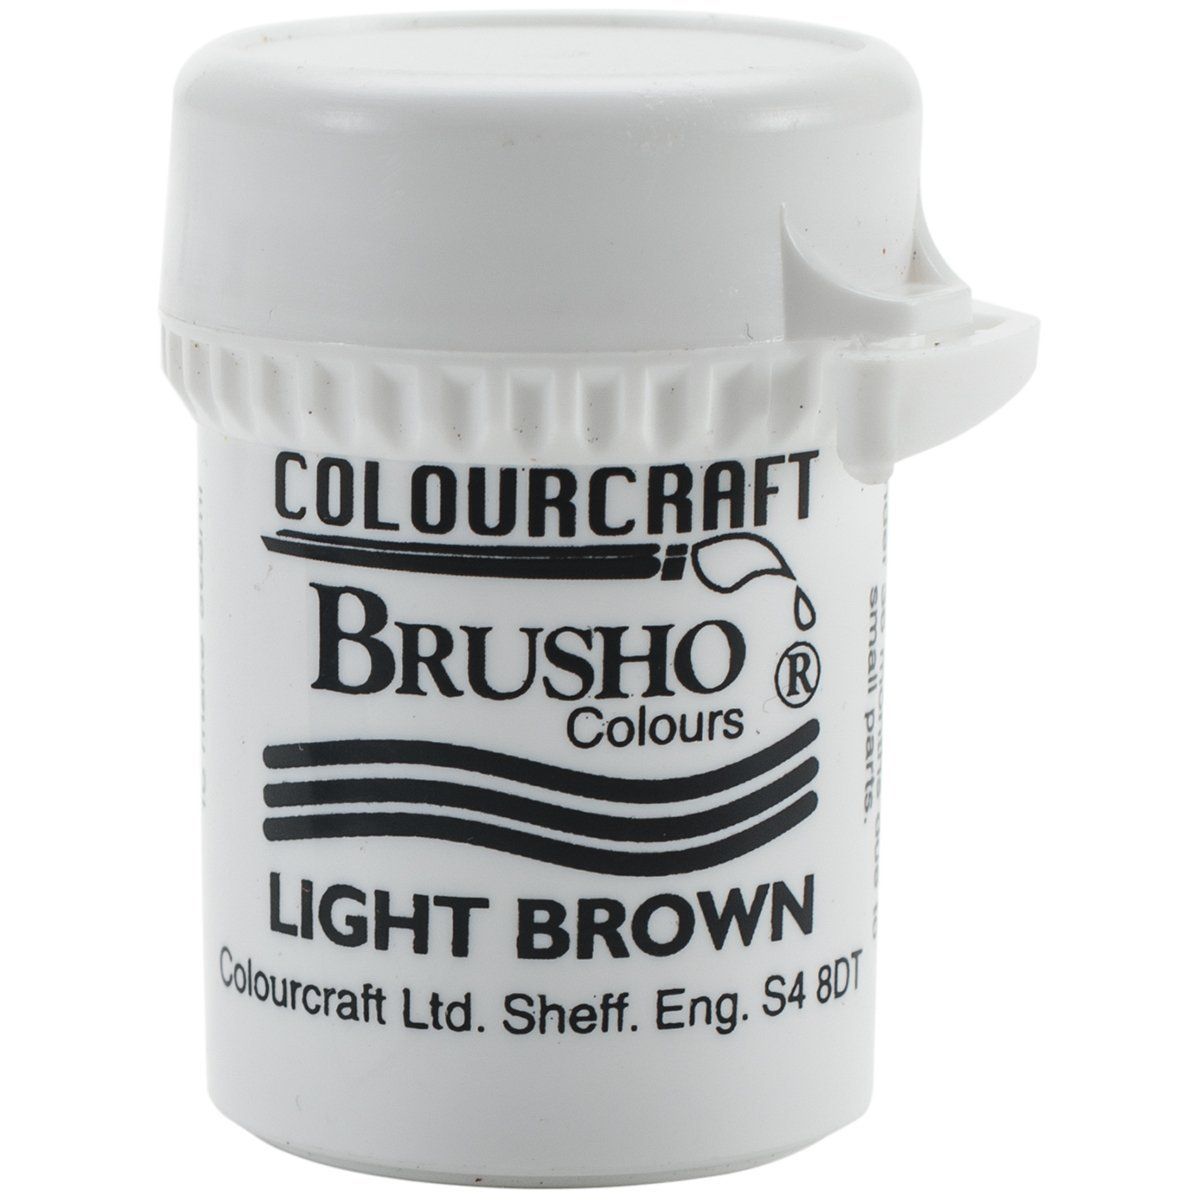 Brusho Crystal Colour - Light Brown 15 gm